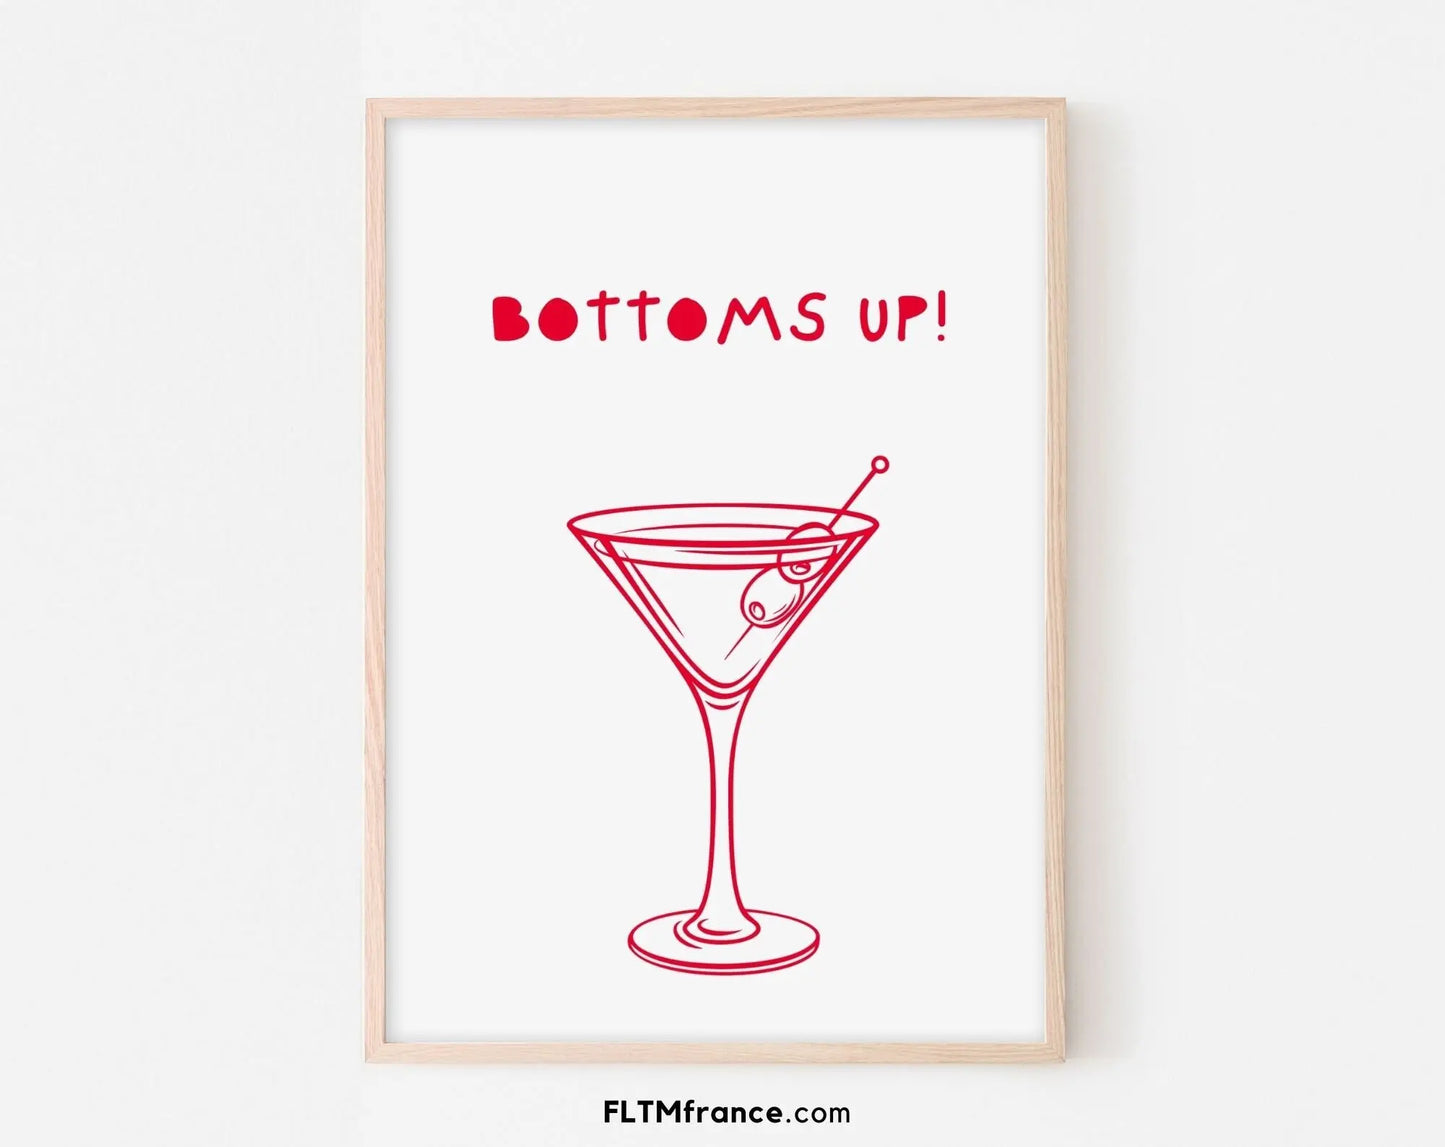 Affiche Bottoms up - Poster cocktail alcool Martini Dry - Affiche boisson - Art mural tendance - Poster à imprimer FLTMfrance